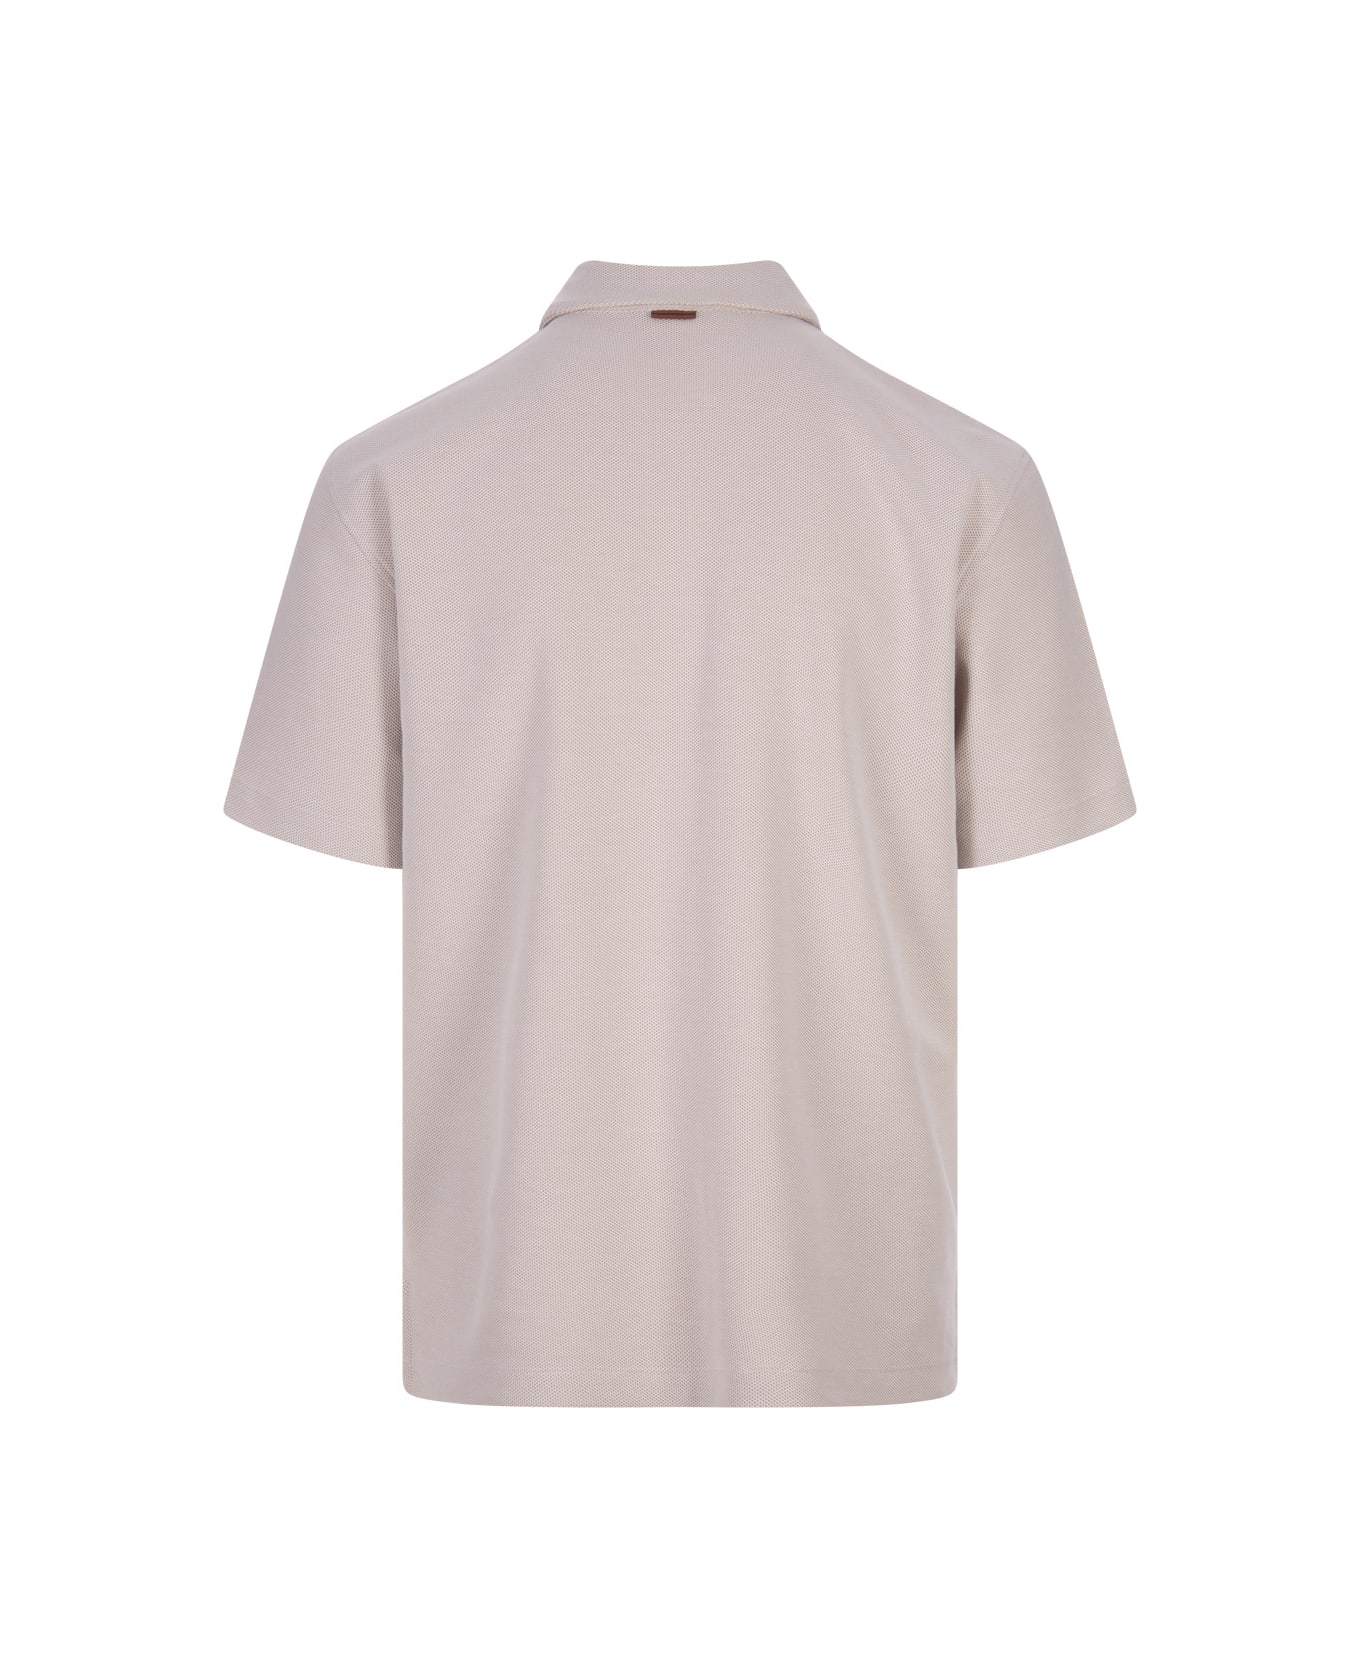 Zegna Beige Honeycomb Cotton Polo Shirt - Brown